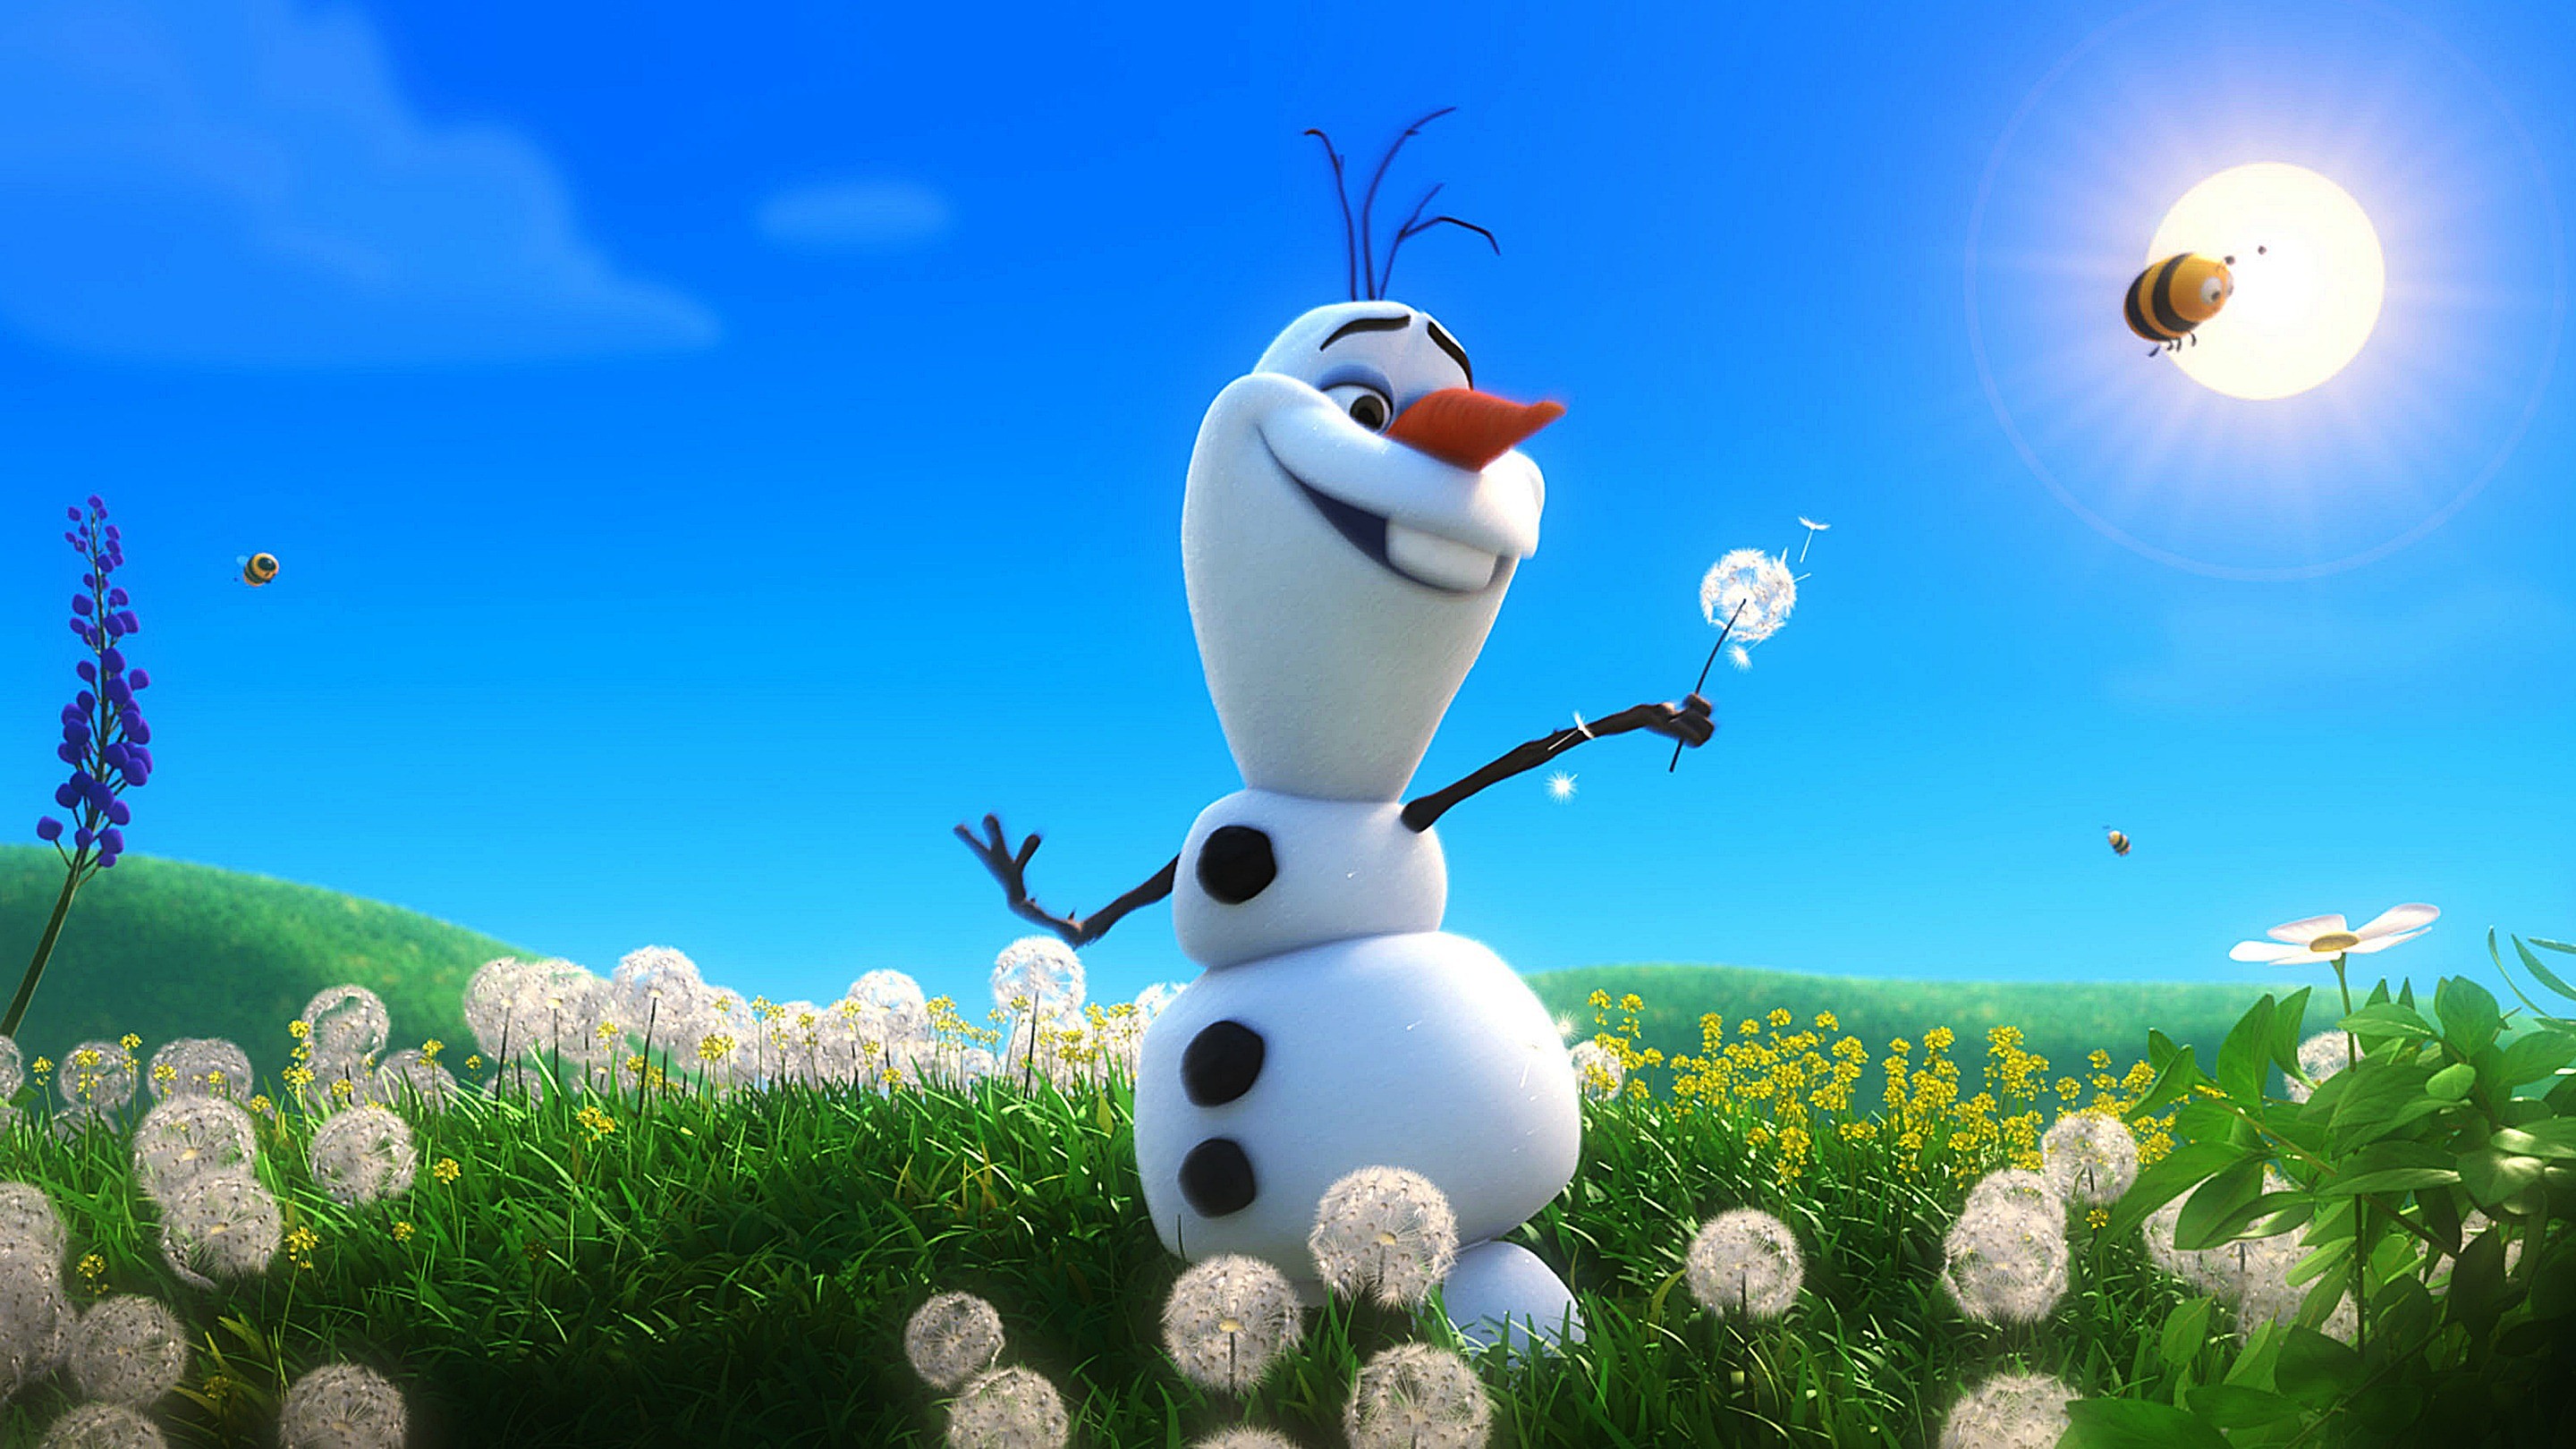 2880x1620 Funny Cartoon Olaf Snowman Frozen Wallpaper | hd wallpaper | Pinterest |  Frozen wallpaper, Olaf and Olaf snowman